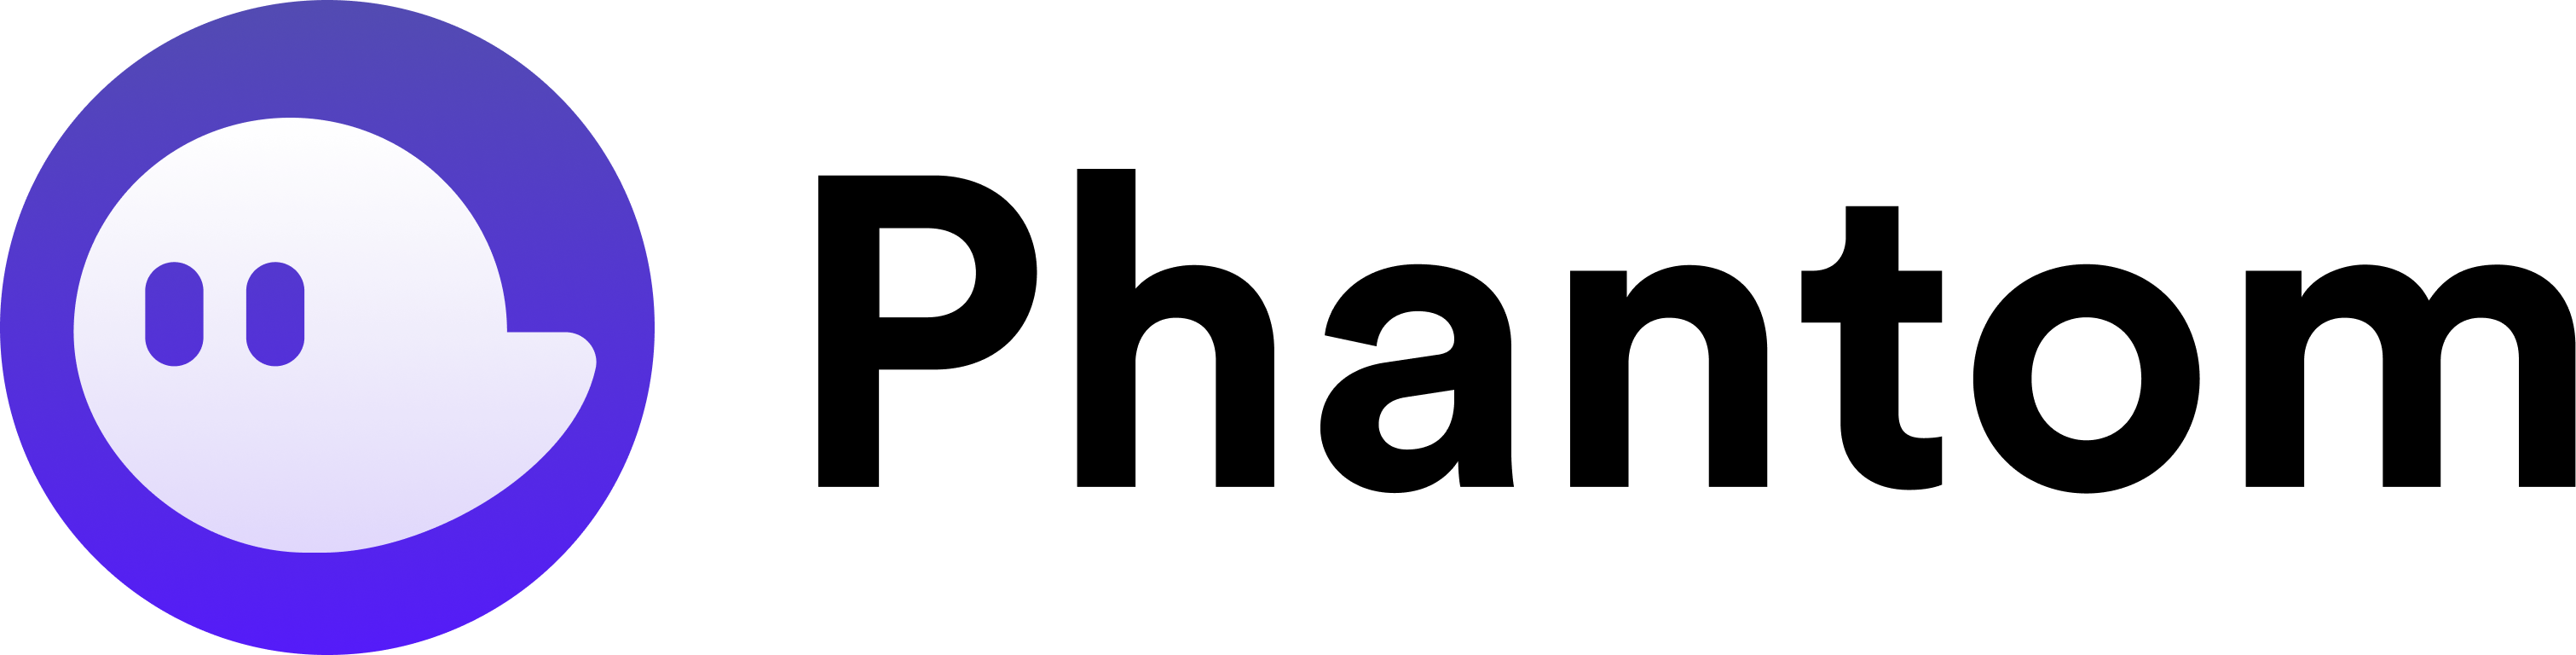 social proof logo